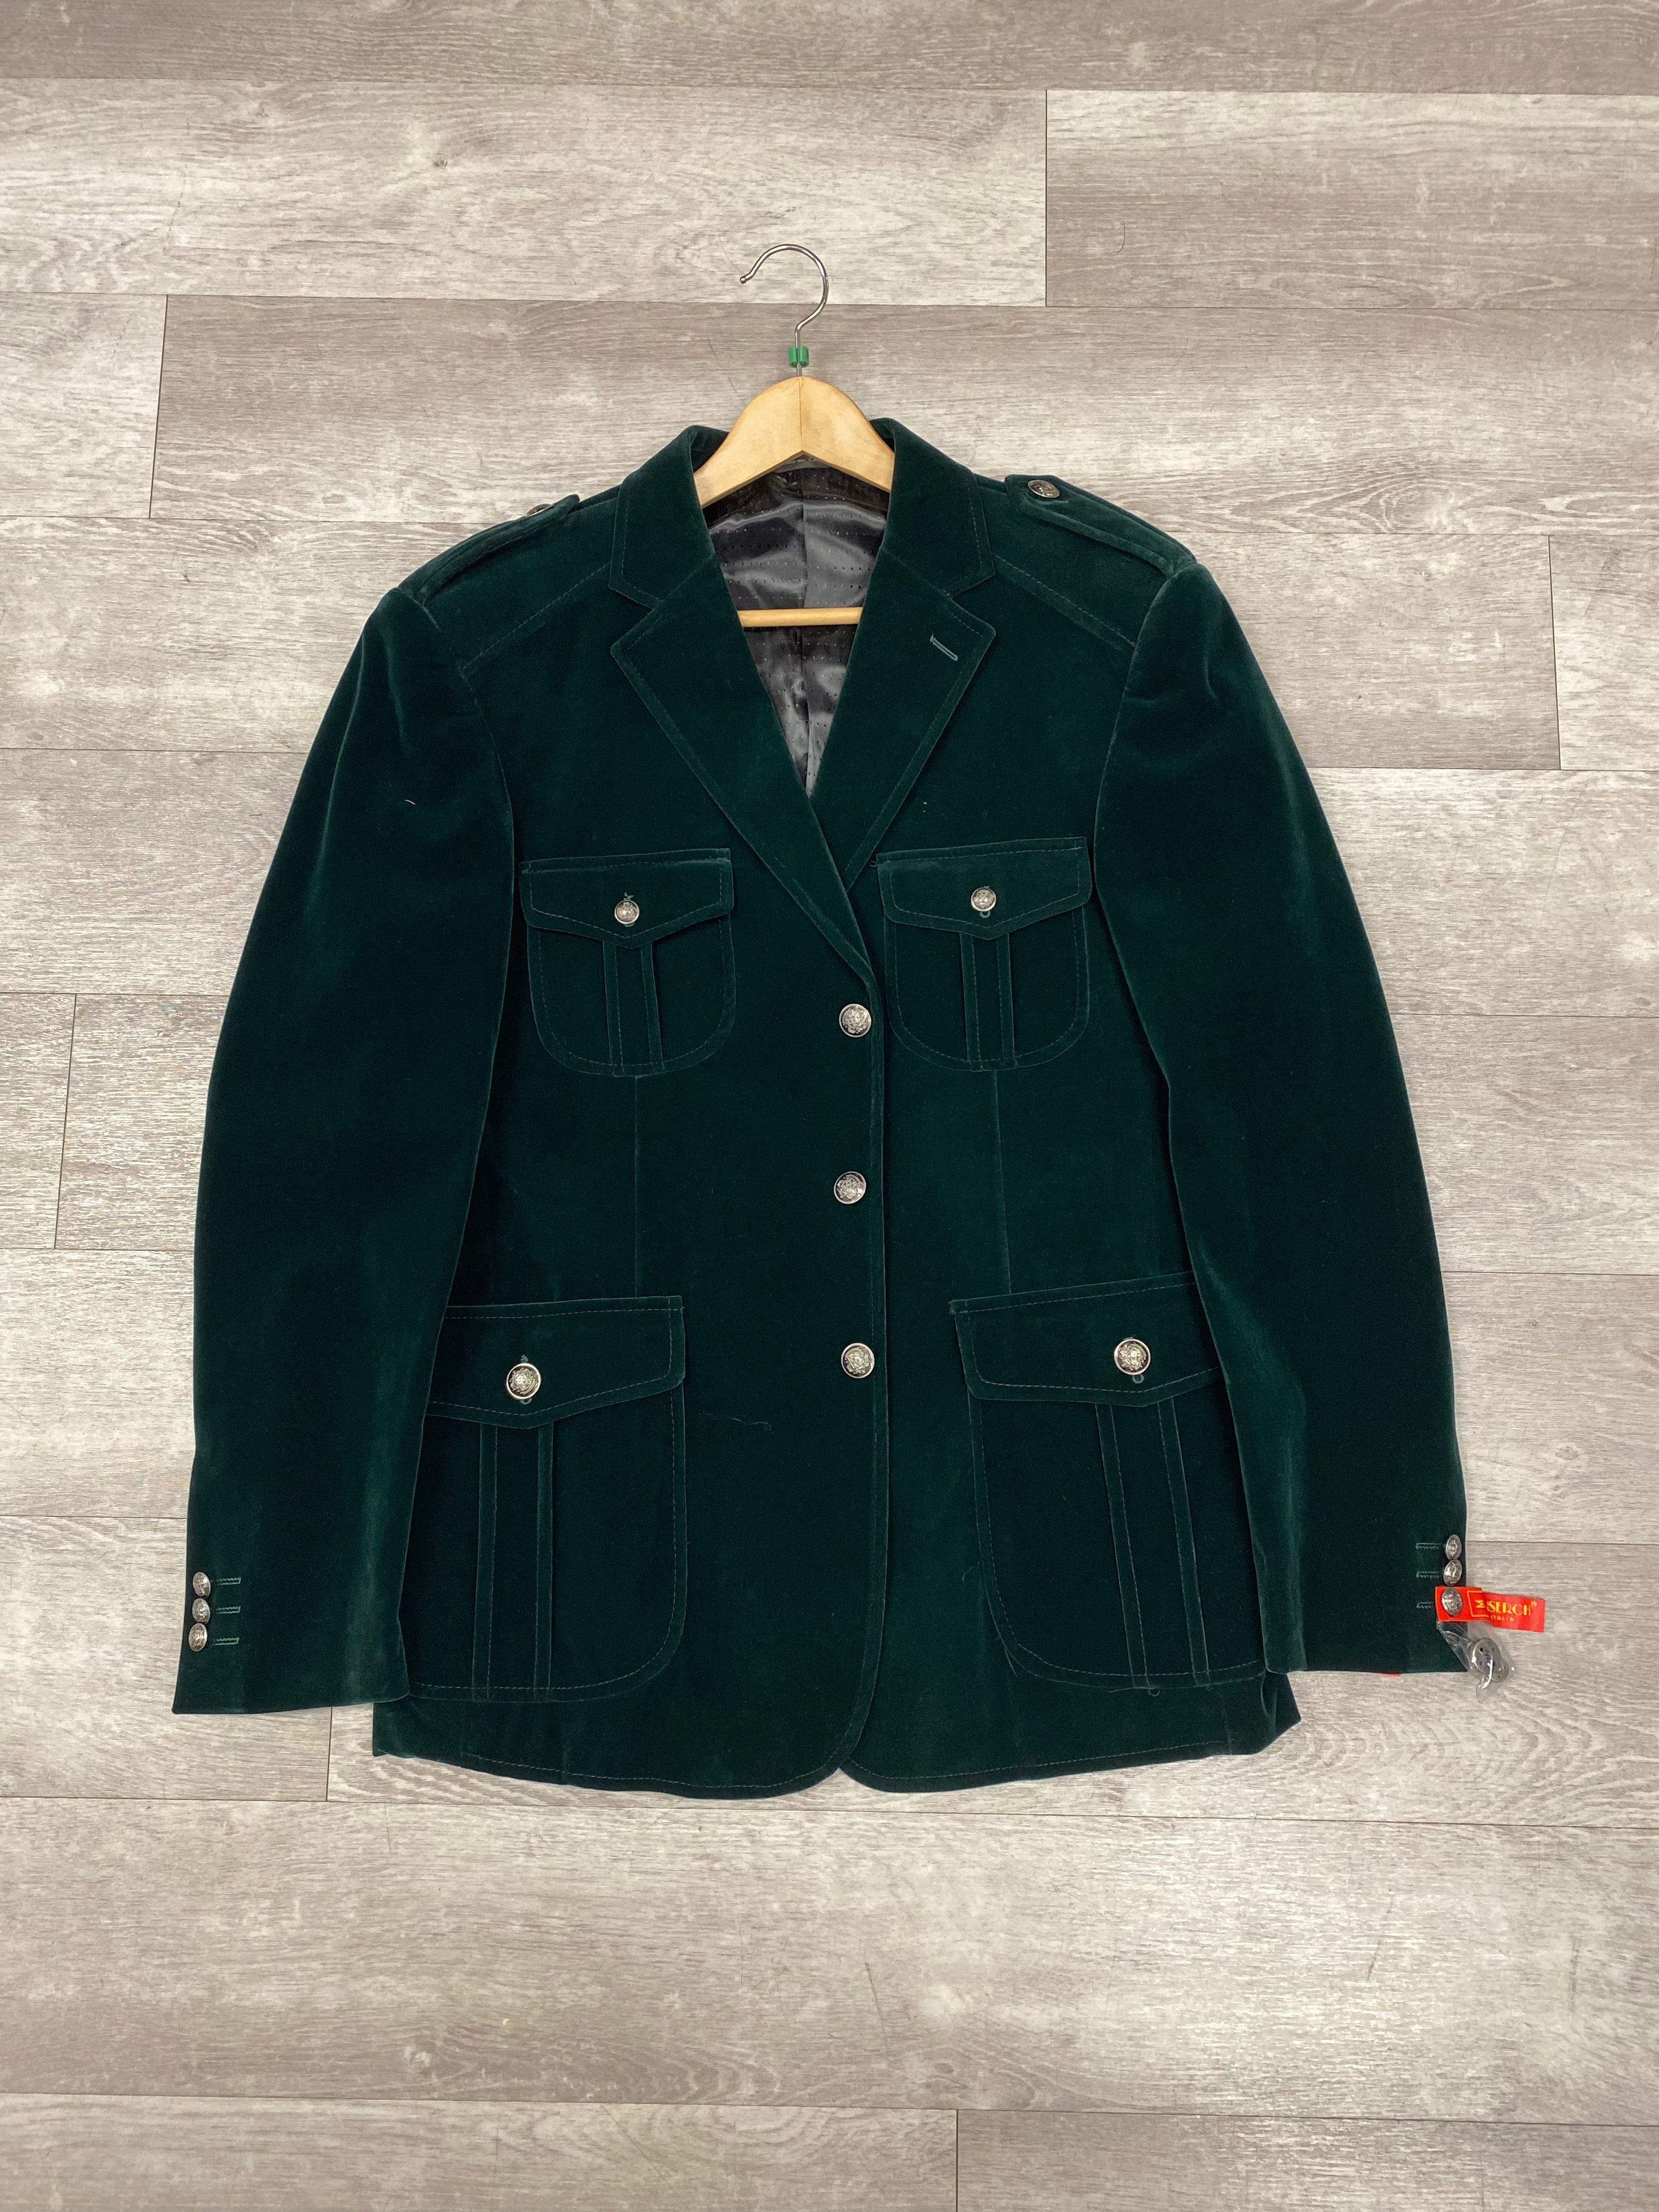 Inserch Paramilitary Velveteen 4-Pocket Blazer BL569-21 Green (SIZE M & 6XL ONLY) (FINAL SALE)